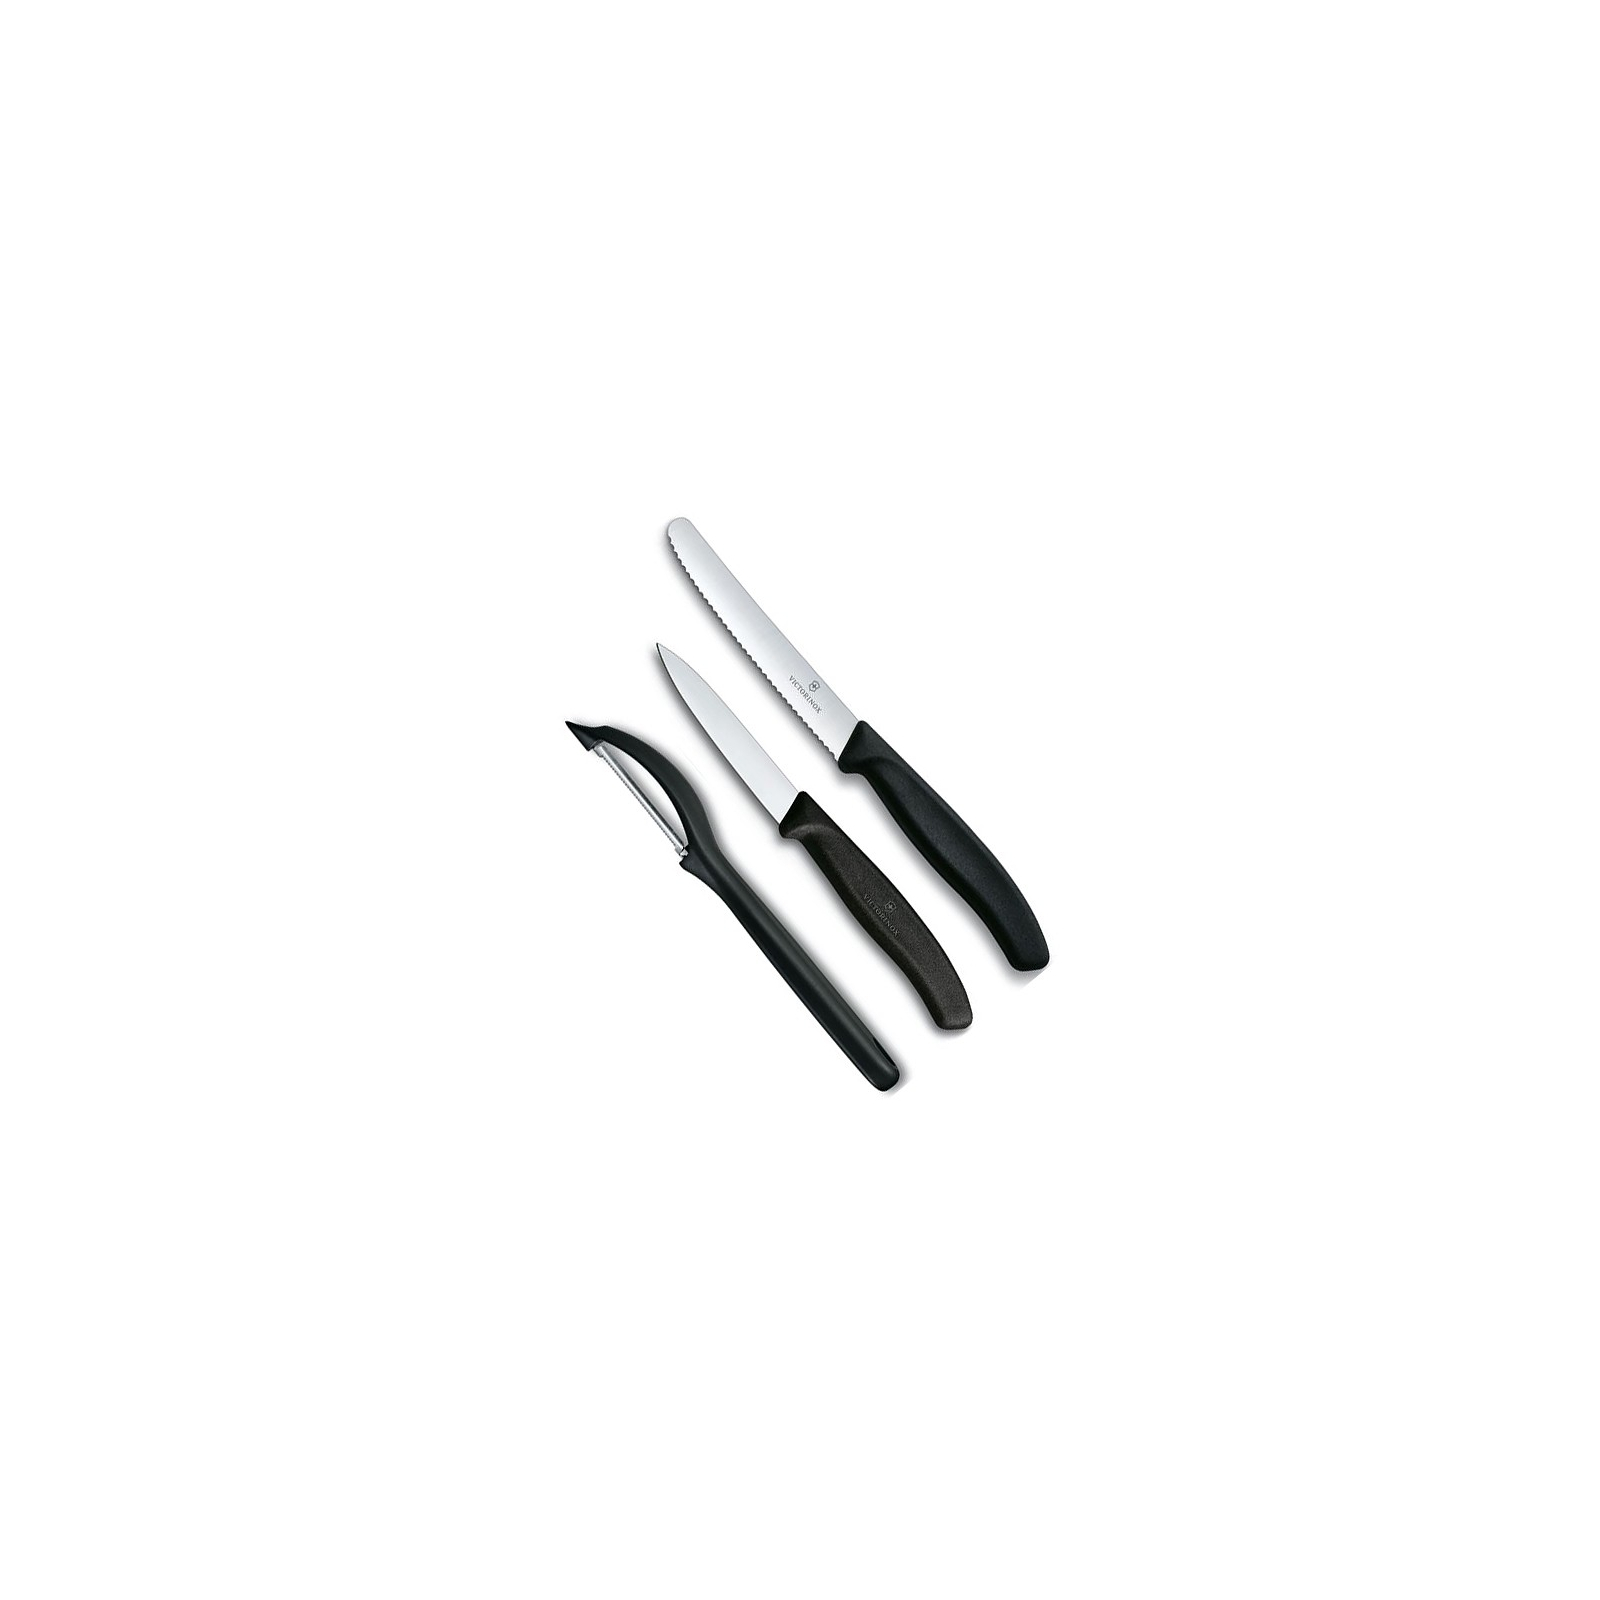 Набір ножів Victorinox SwissClassic из 3 предметов Черный с овощечисткой (6.7113.31)